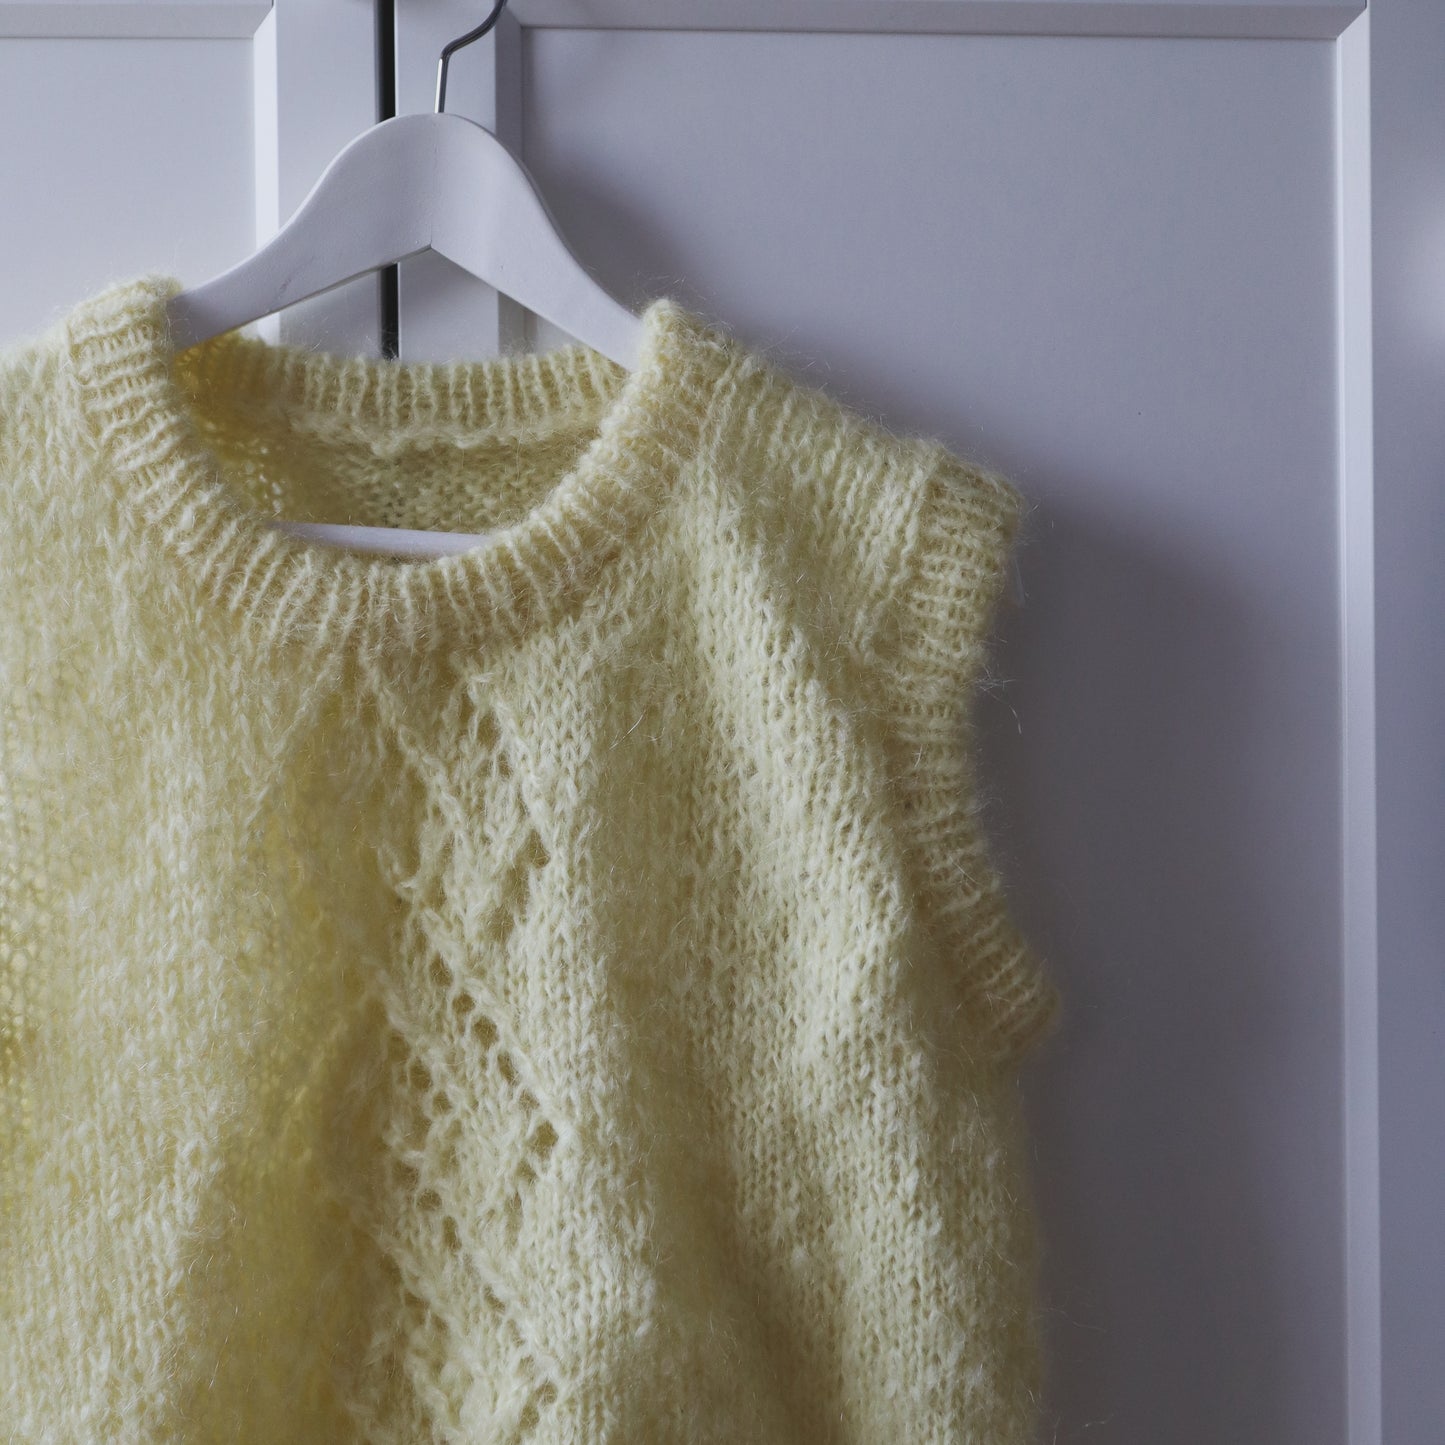 Kirvi vest knitting pattern for adults